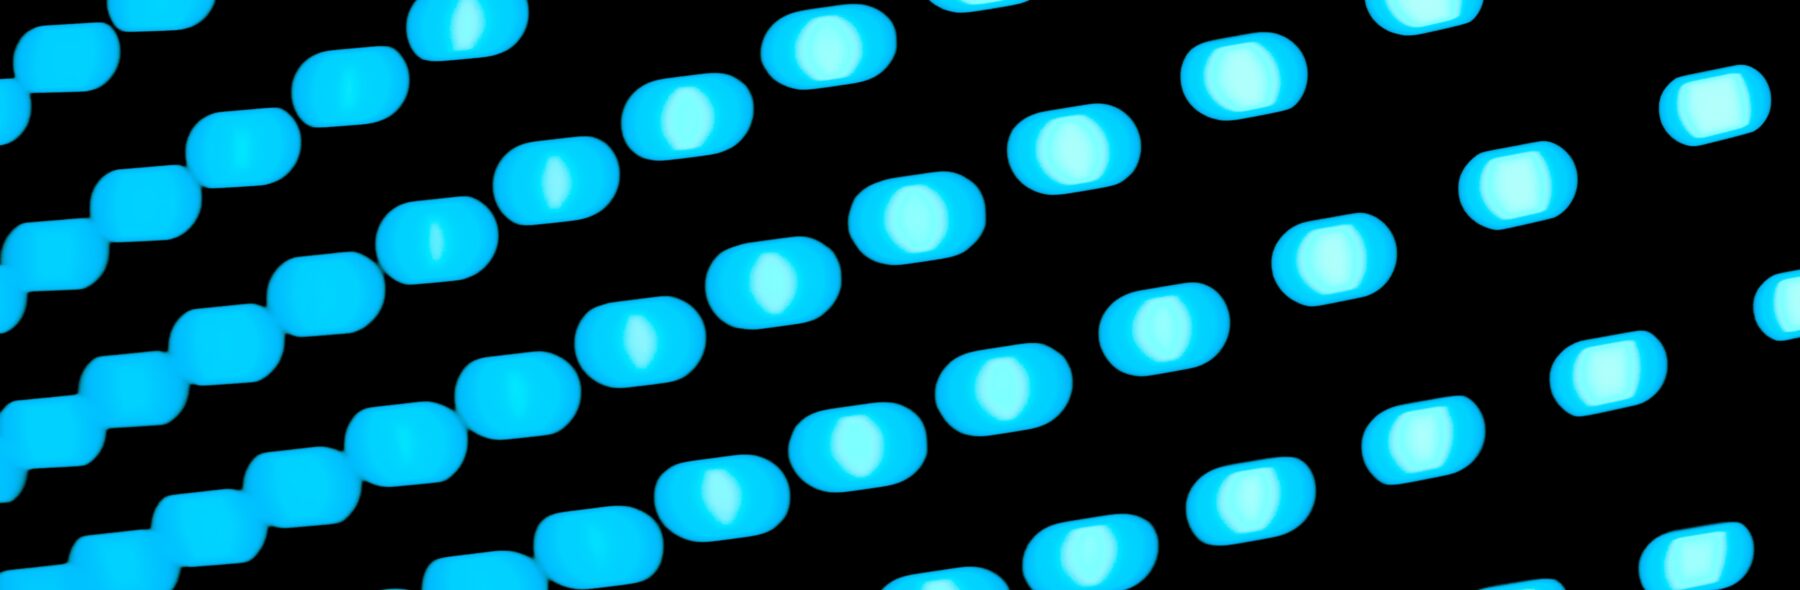 Blue lights on black background going diagonally across image.